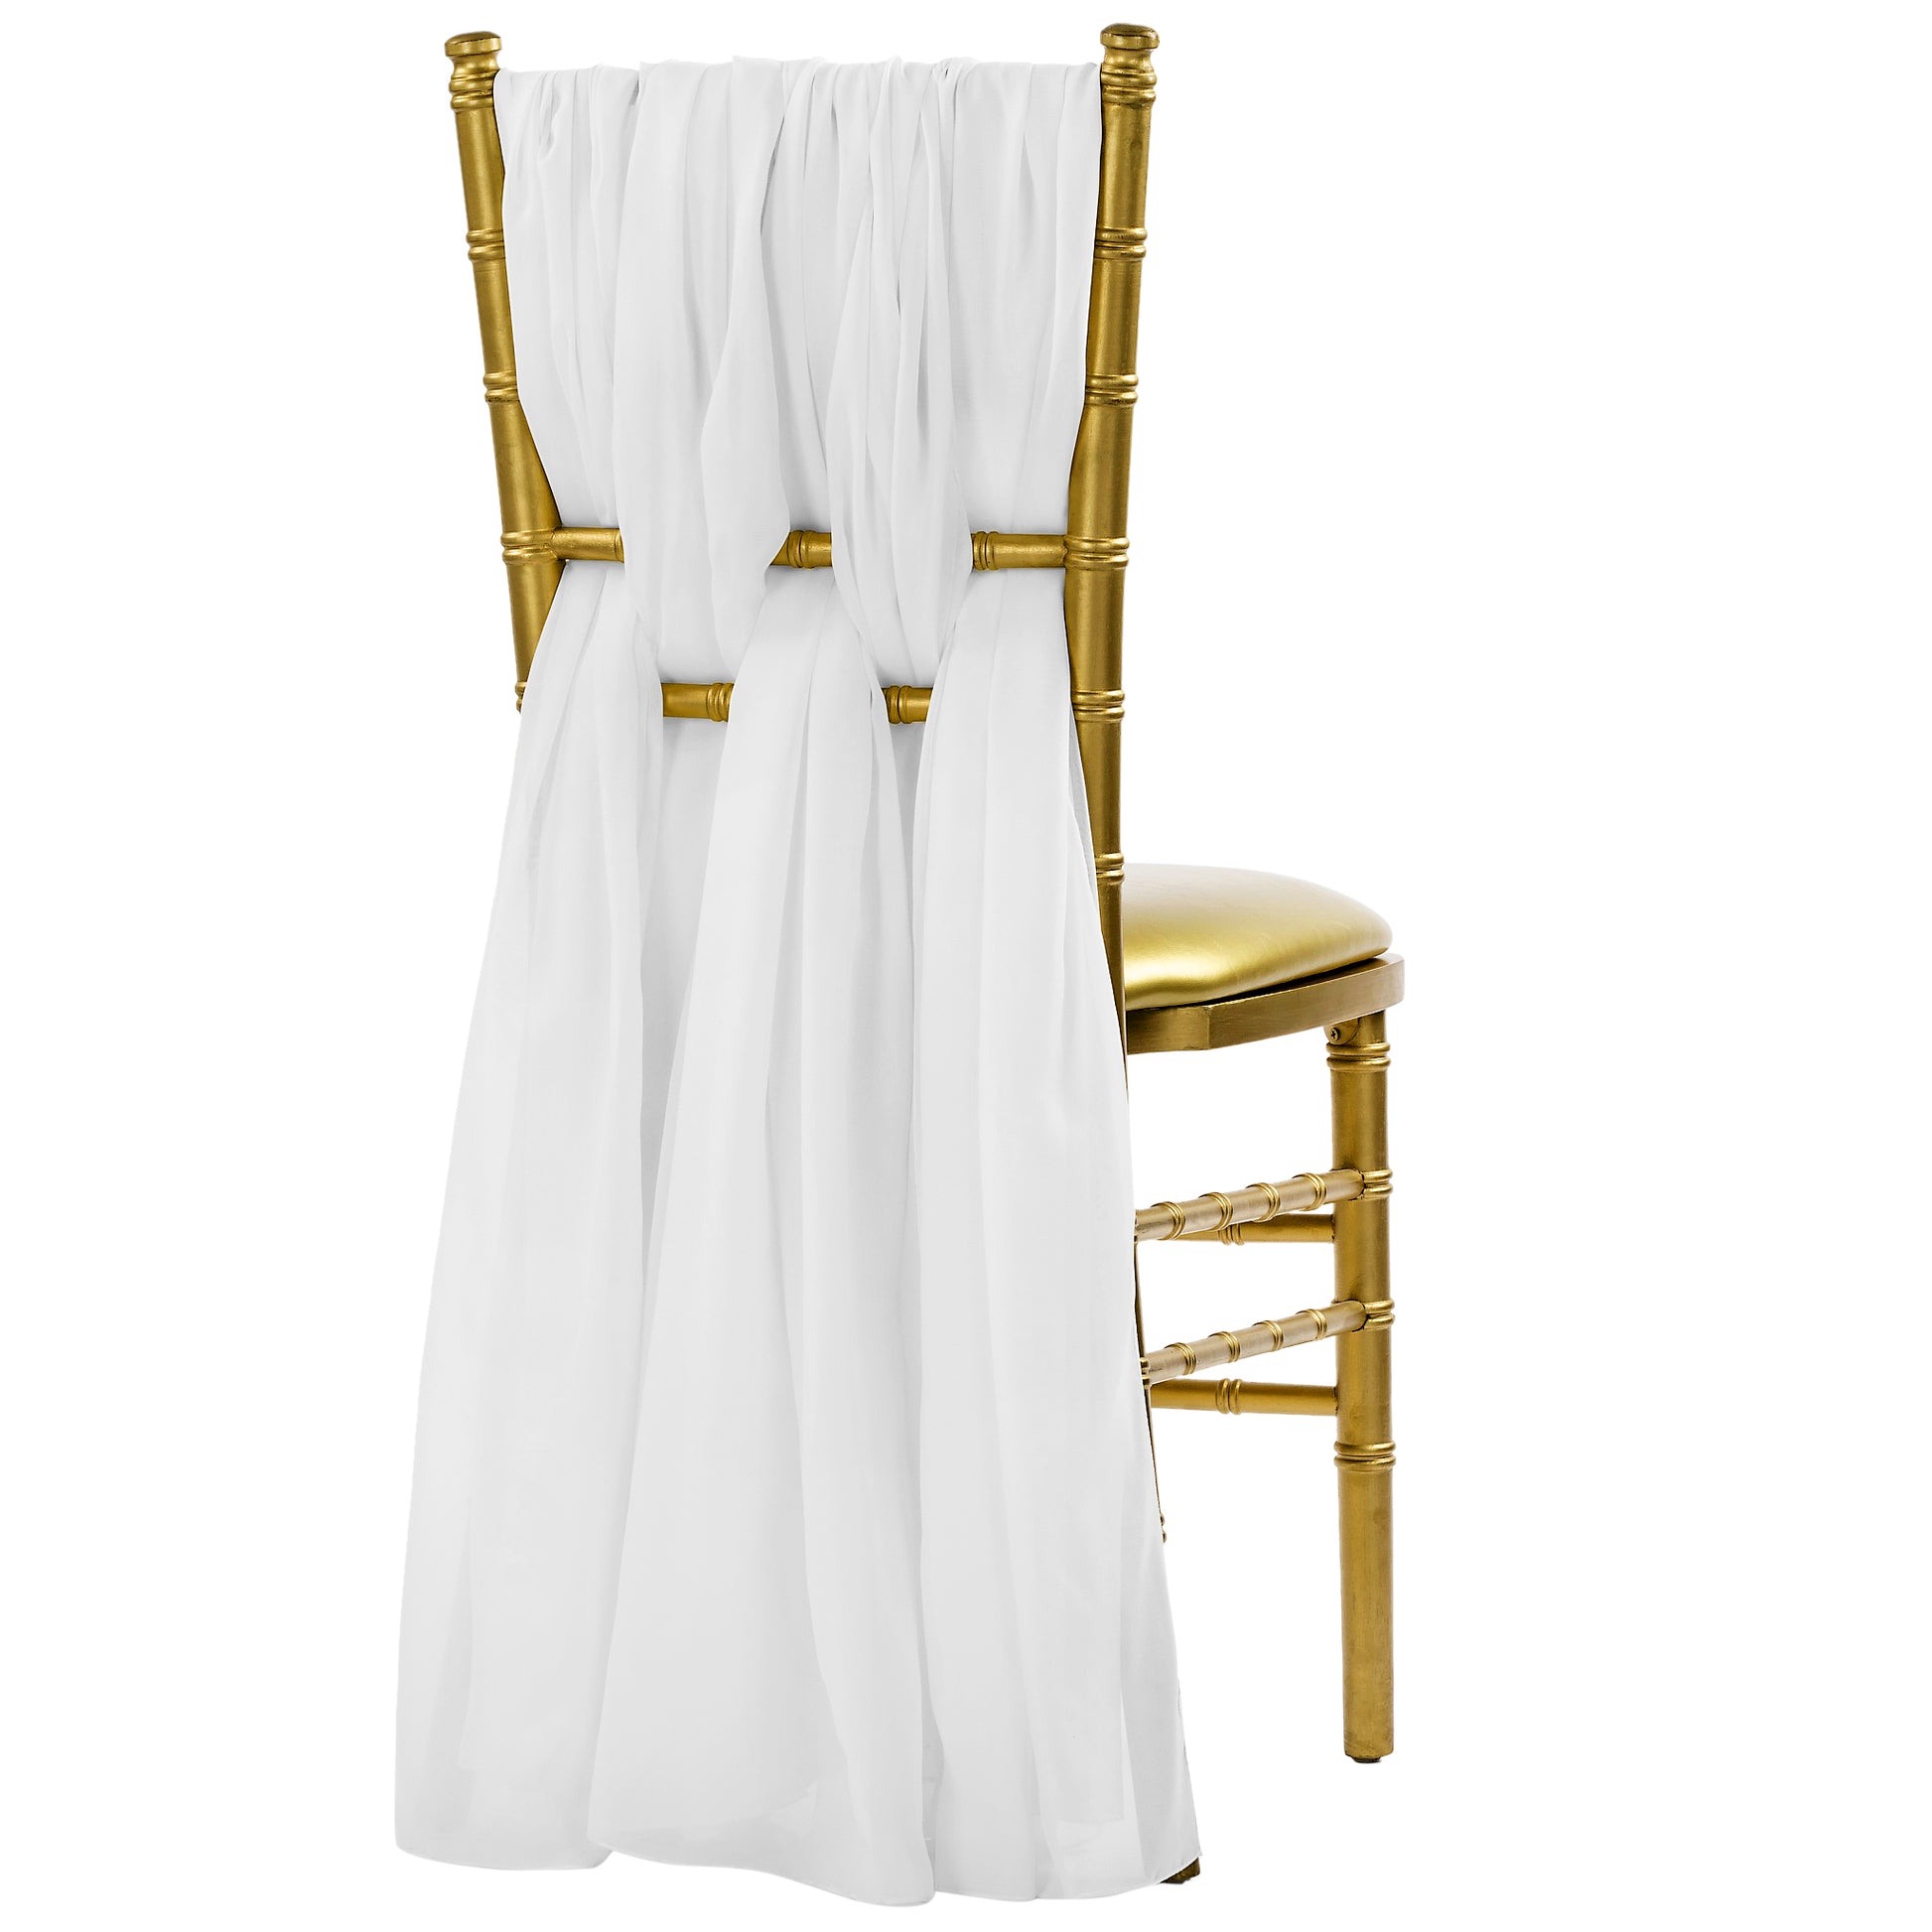 5pcs Pack of Chiffon Chair Sashes/Ties - White - CV Linens